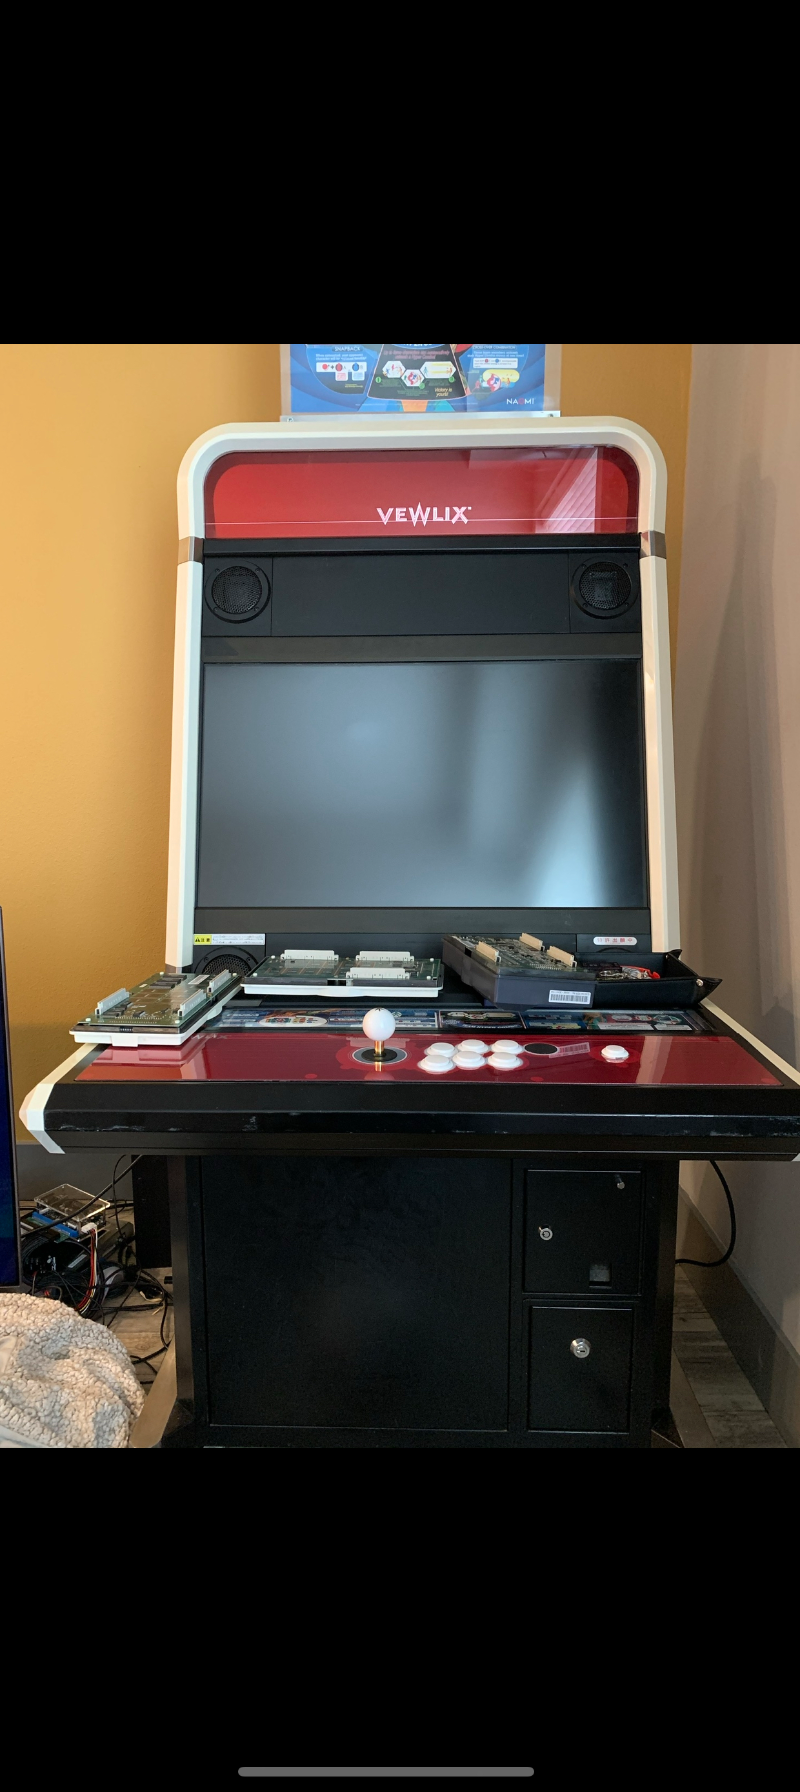 Replacement Vesa VSG-92001 100x100 (LCD stand)